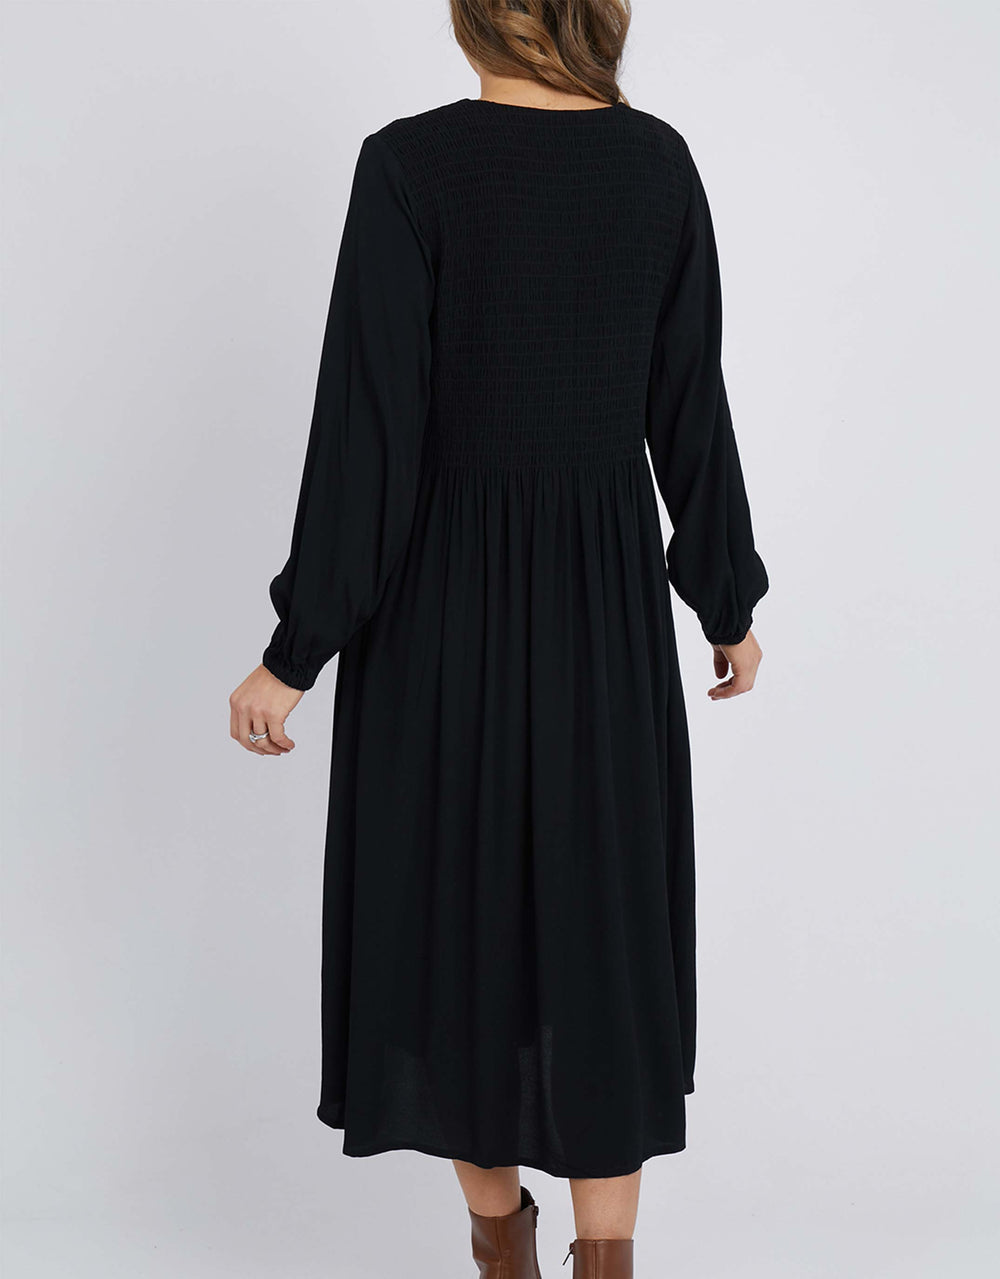 elm-lotti-midi-dress-black-womens-clothing